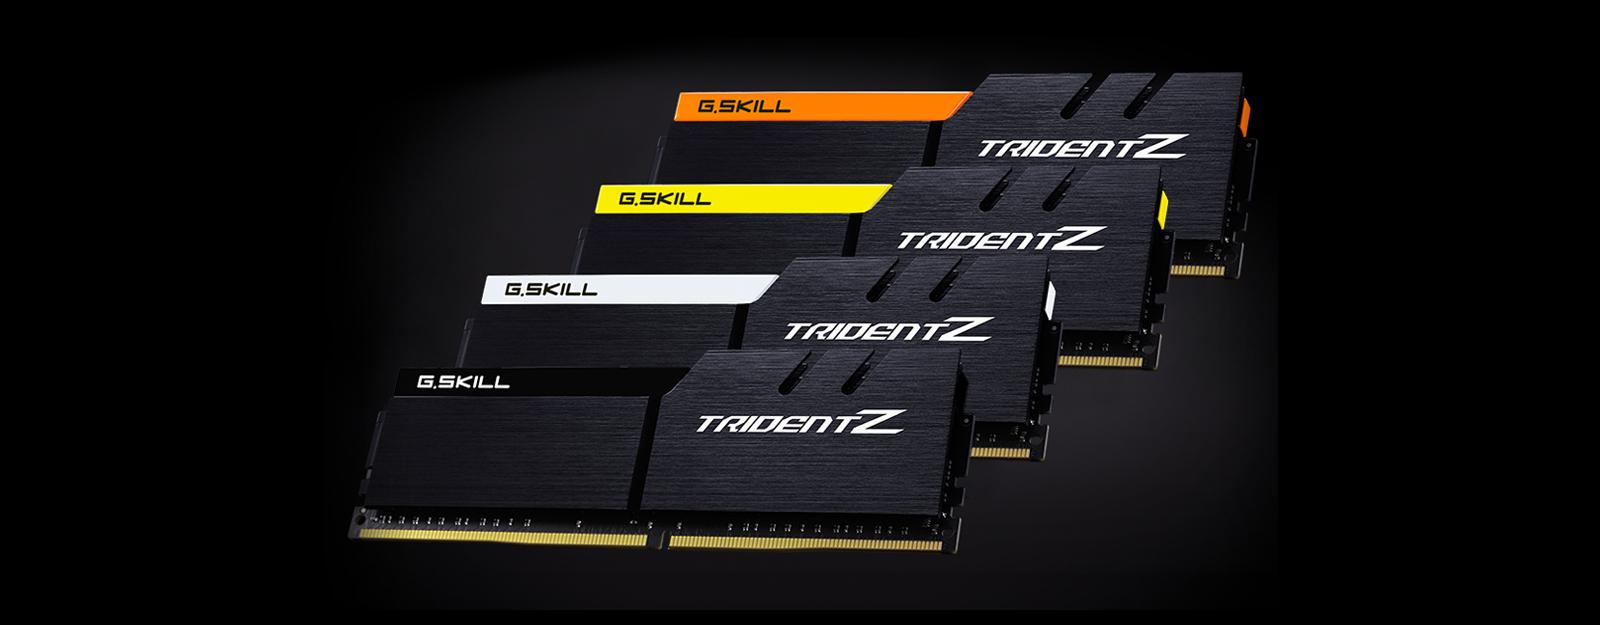 G.Skill Trident Z 4GB DDR4 3200Mhz Desktop Ram Overclocking